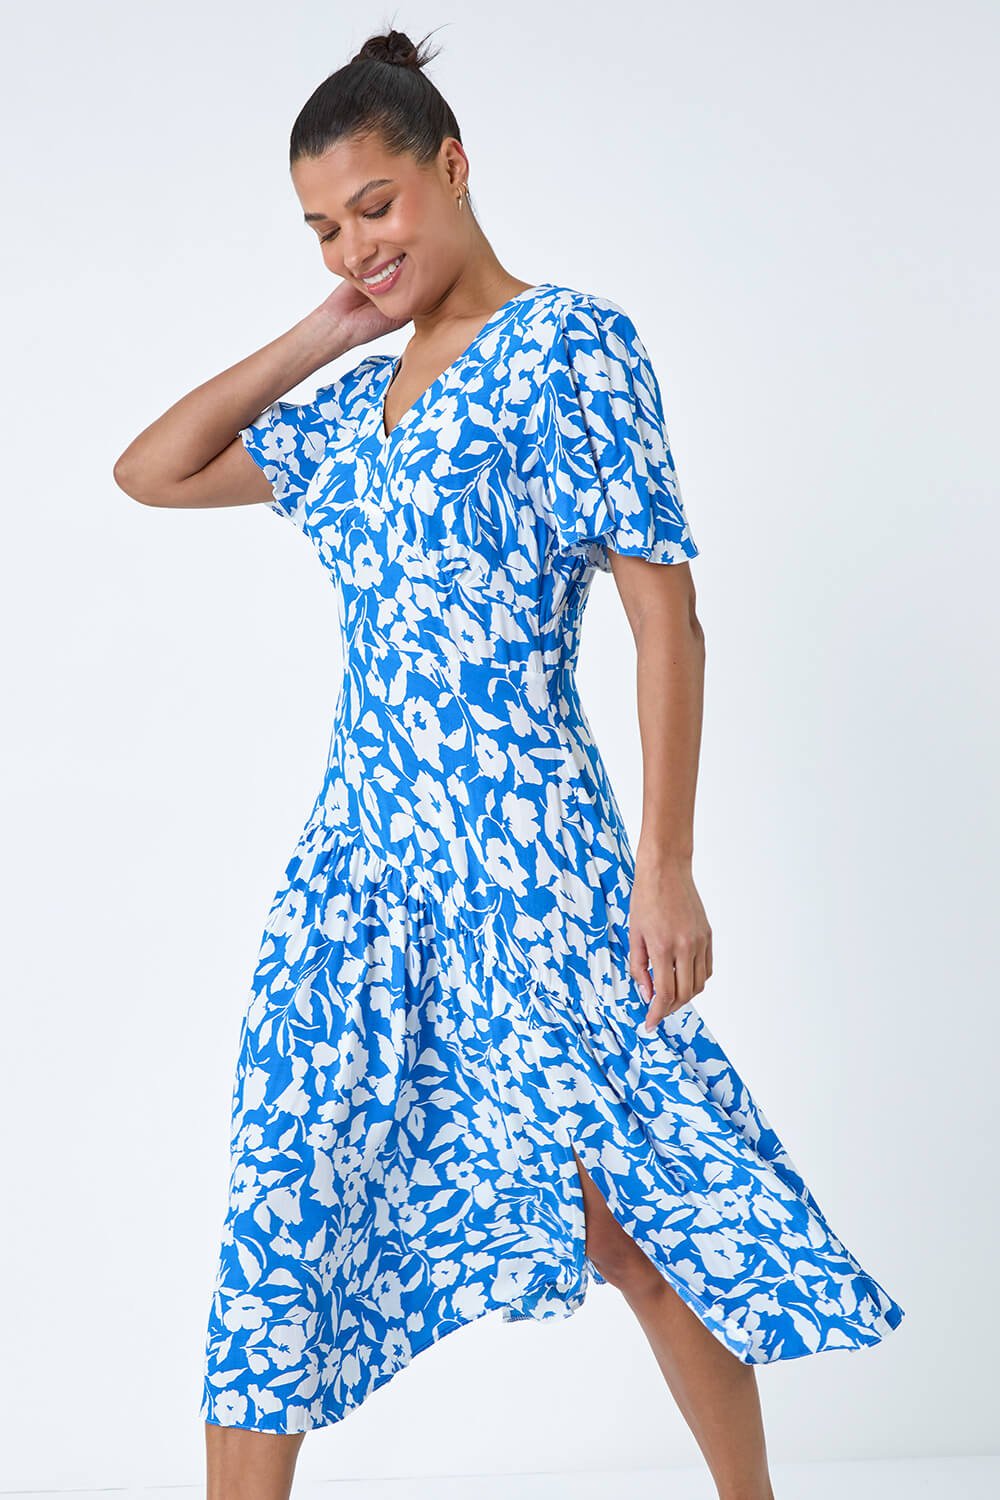 Tiered Contrast Floral Print Dress in Blue - Roman Originals UK